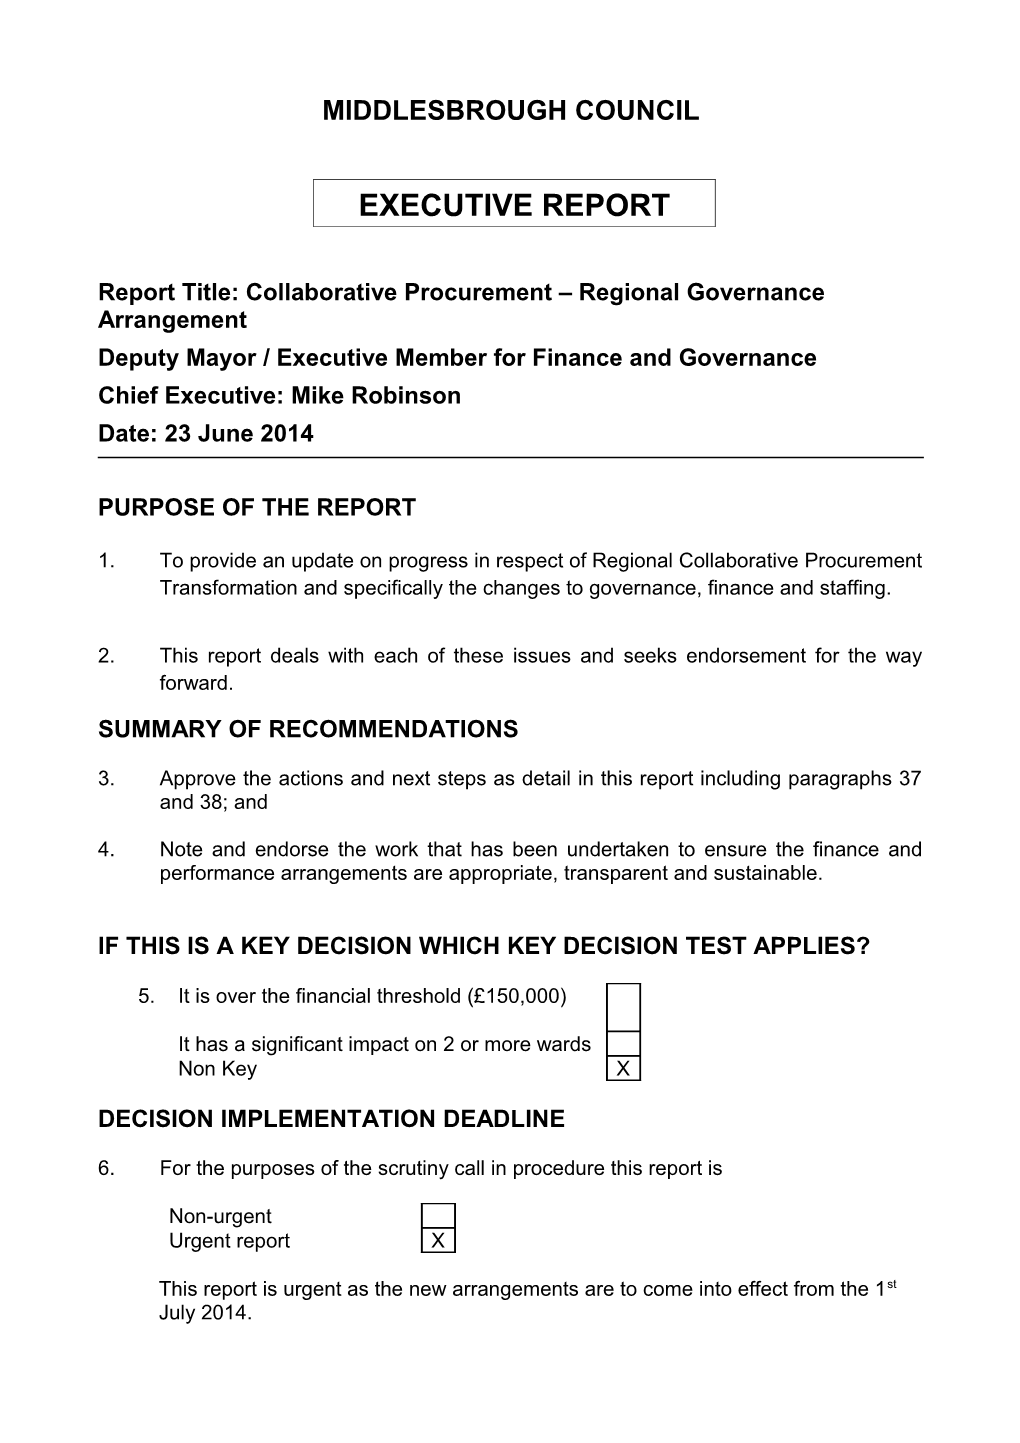 Report Title: Collaborative Procurement Regional Governance Arrangement